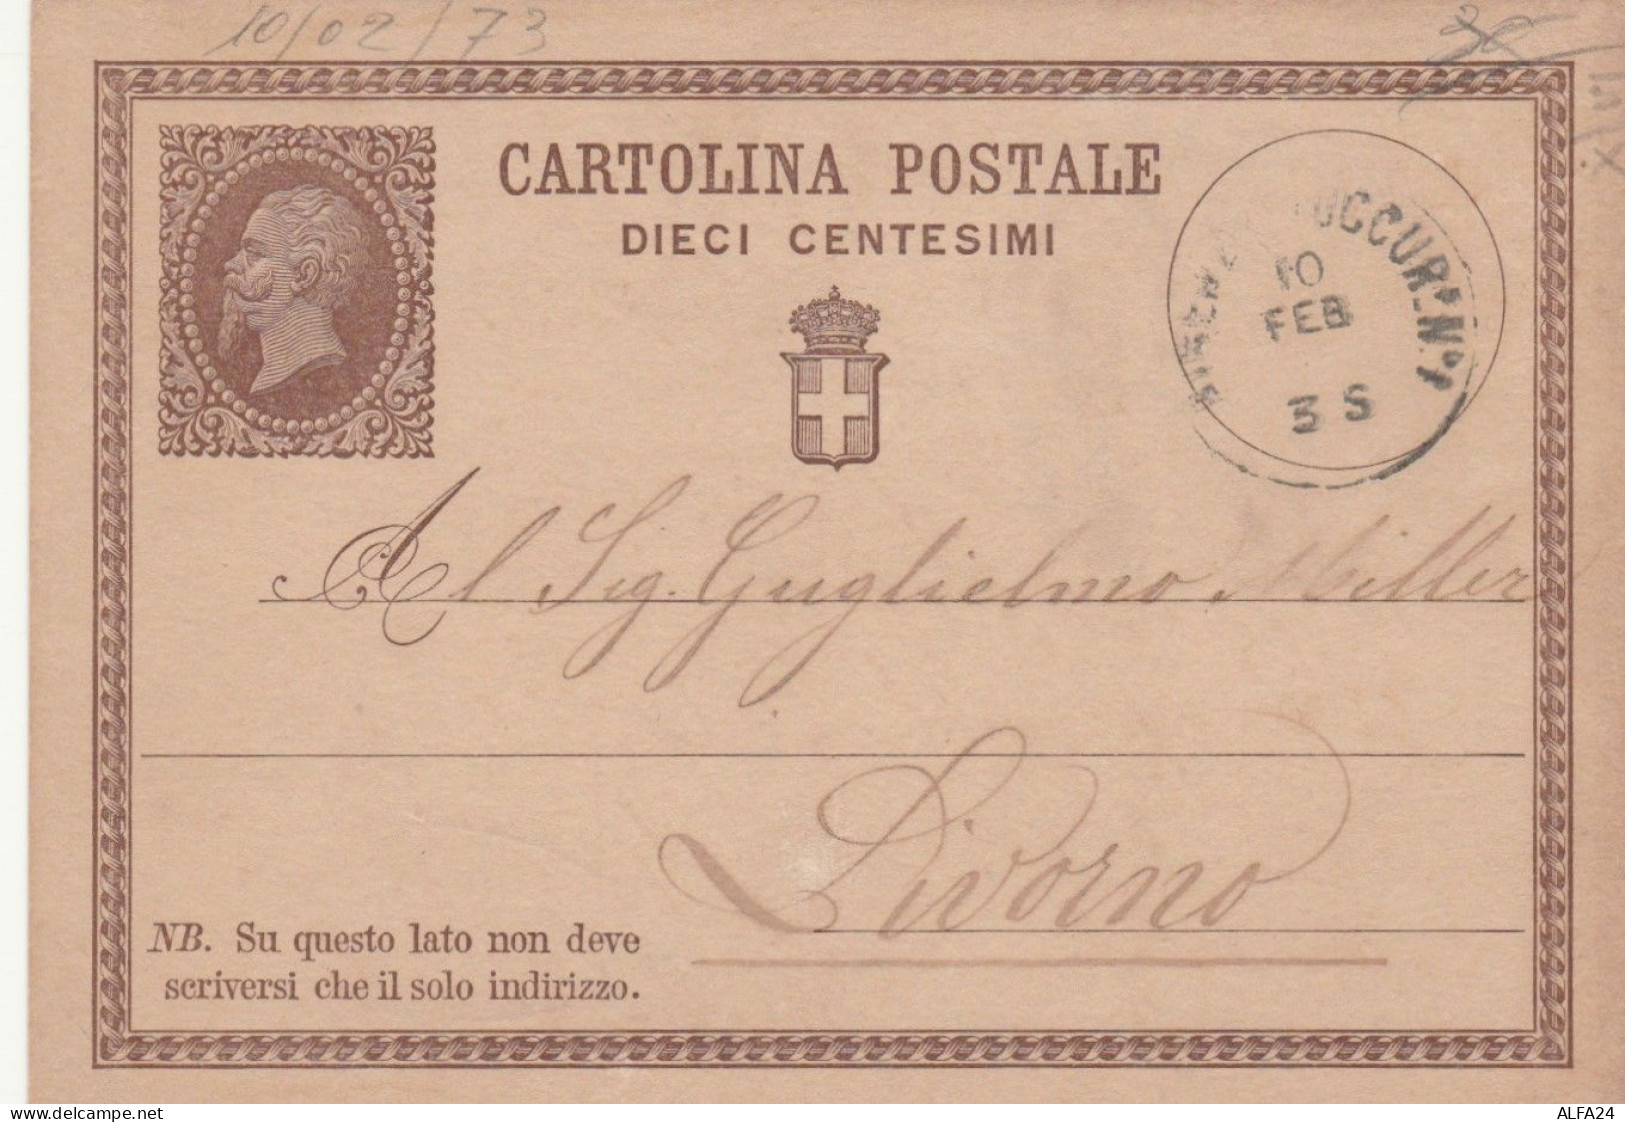 INTERO POSTALE 10 CENT 1873-CAT.LASER 1 (HC1 - Interi Postali